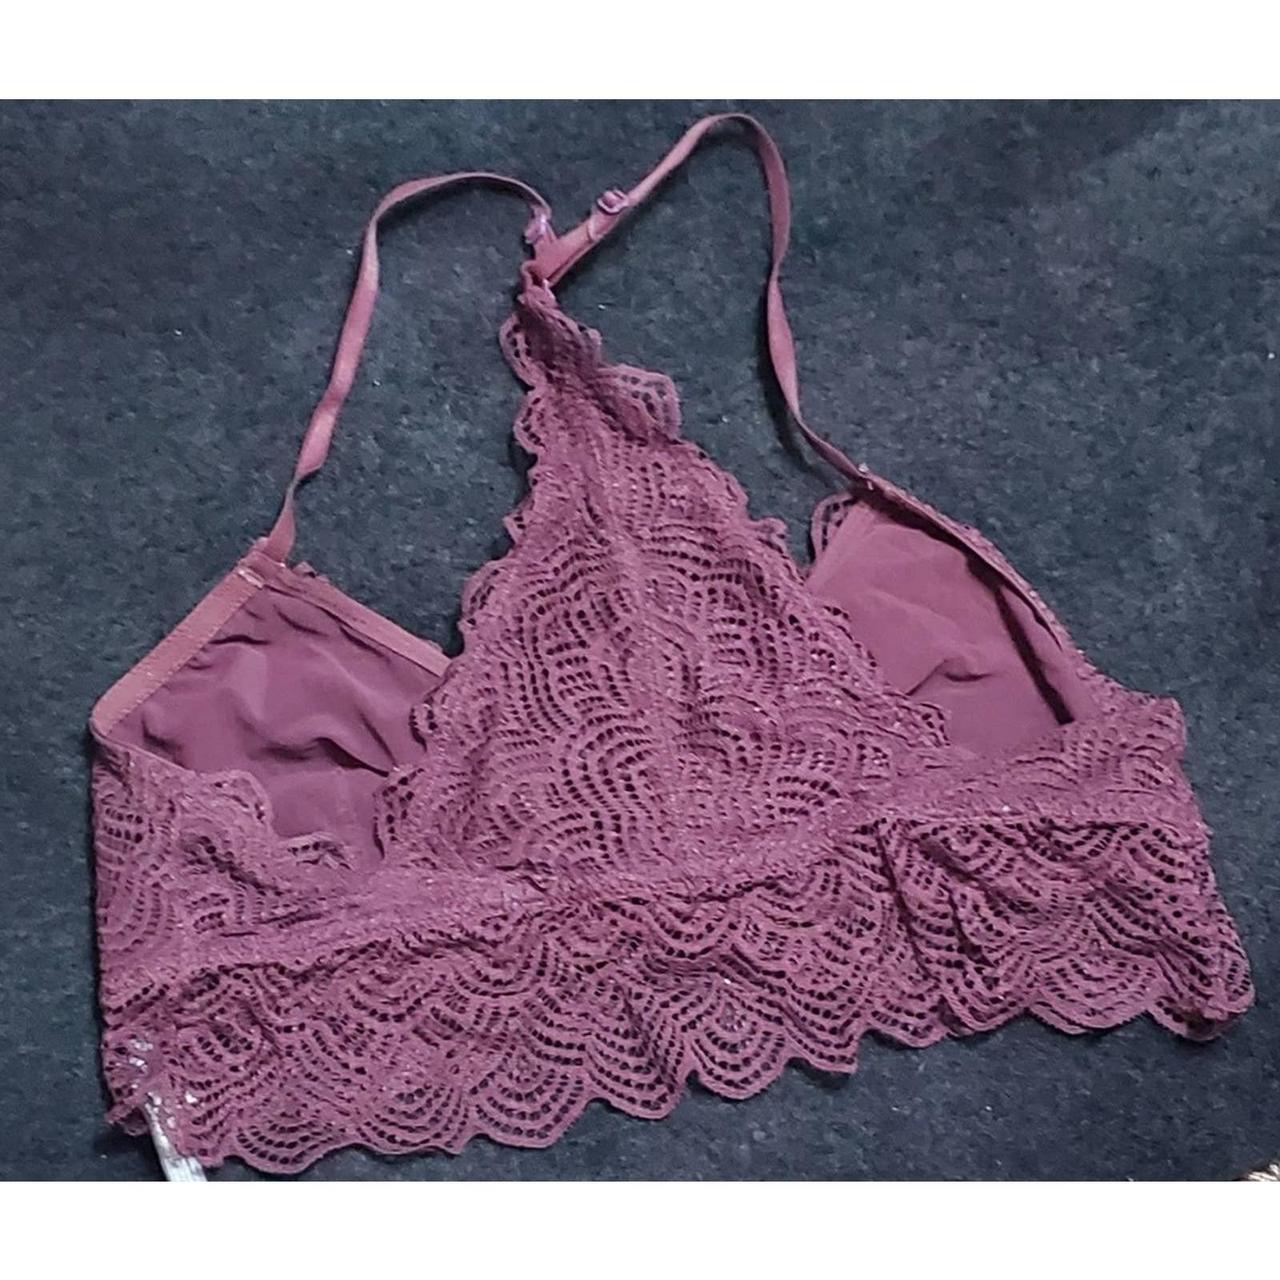 Aerie purple lace bralette size small